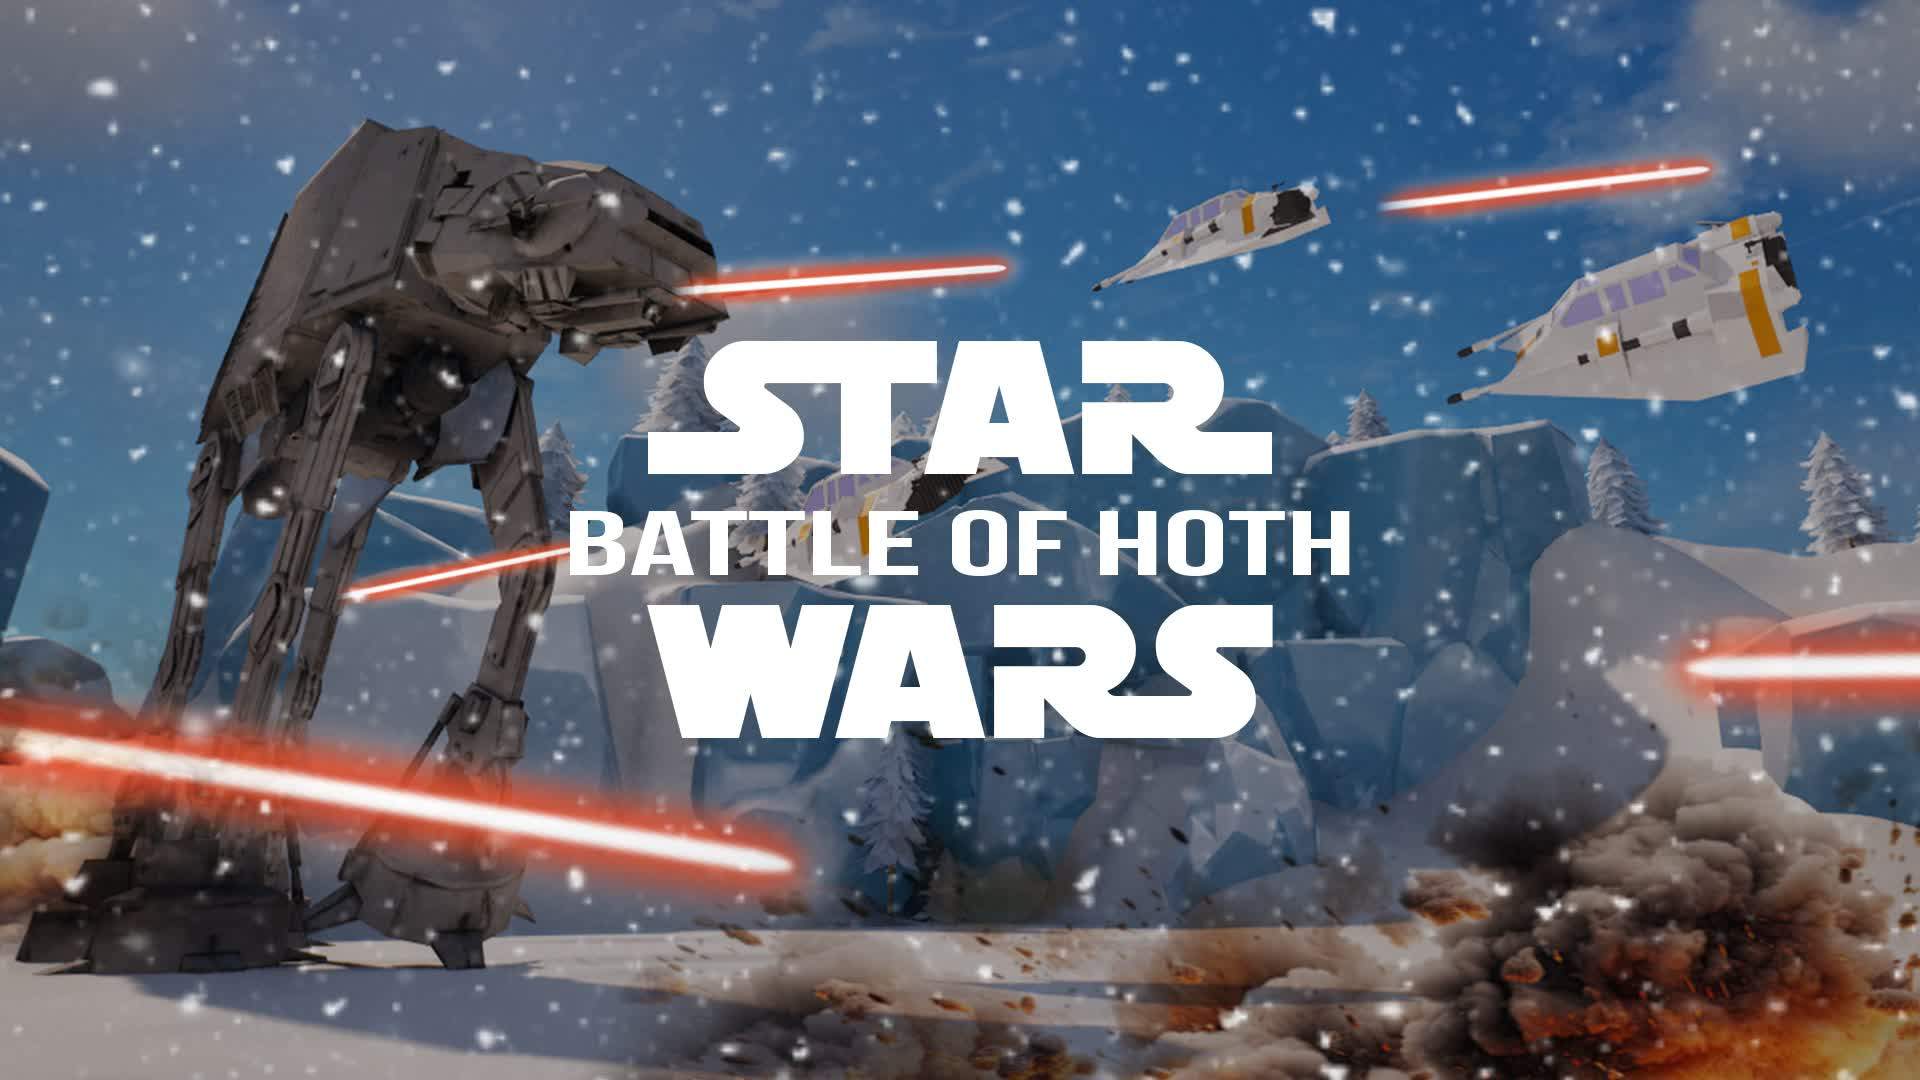 Star Wars Battle of Hoth